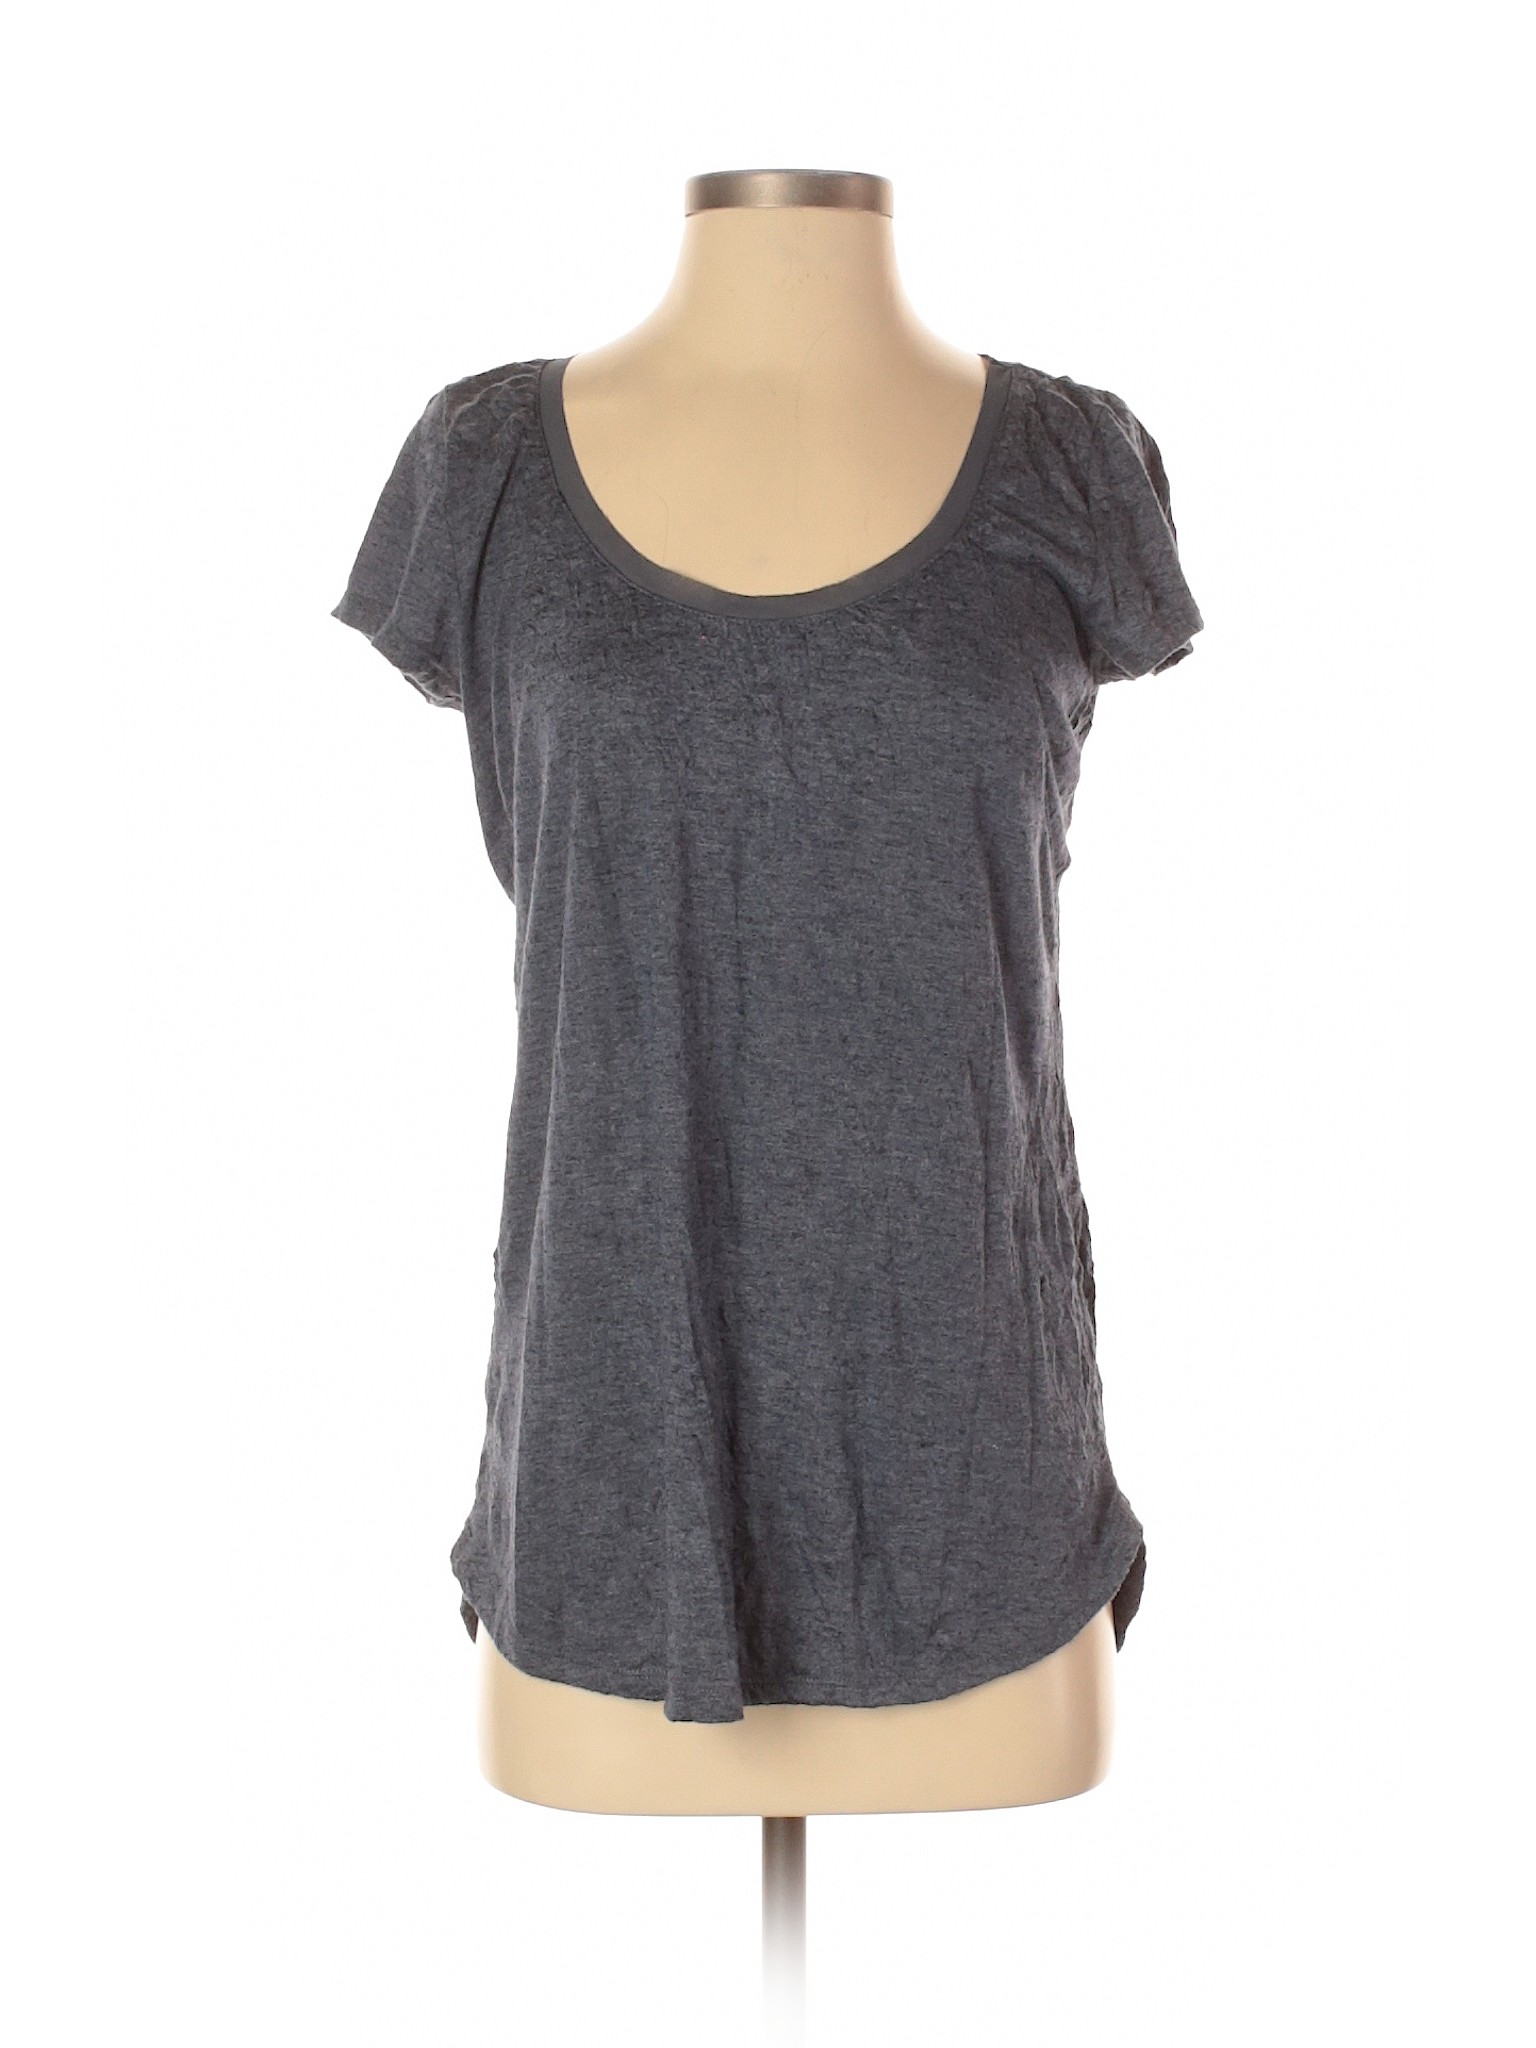 Simply Vera Vera Wang Women Gray Short Sleeve Top XS | eBay